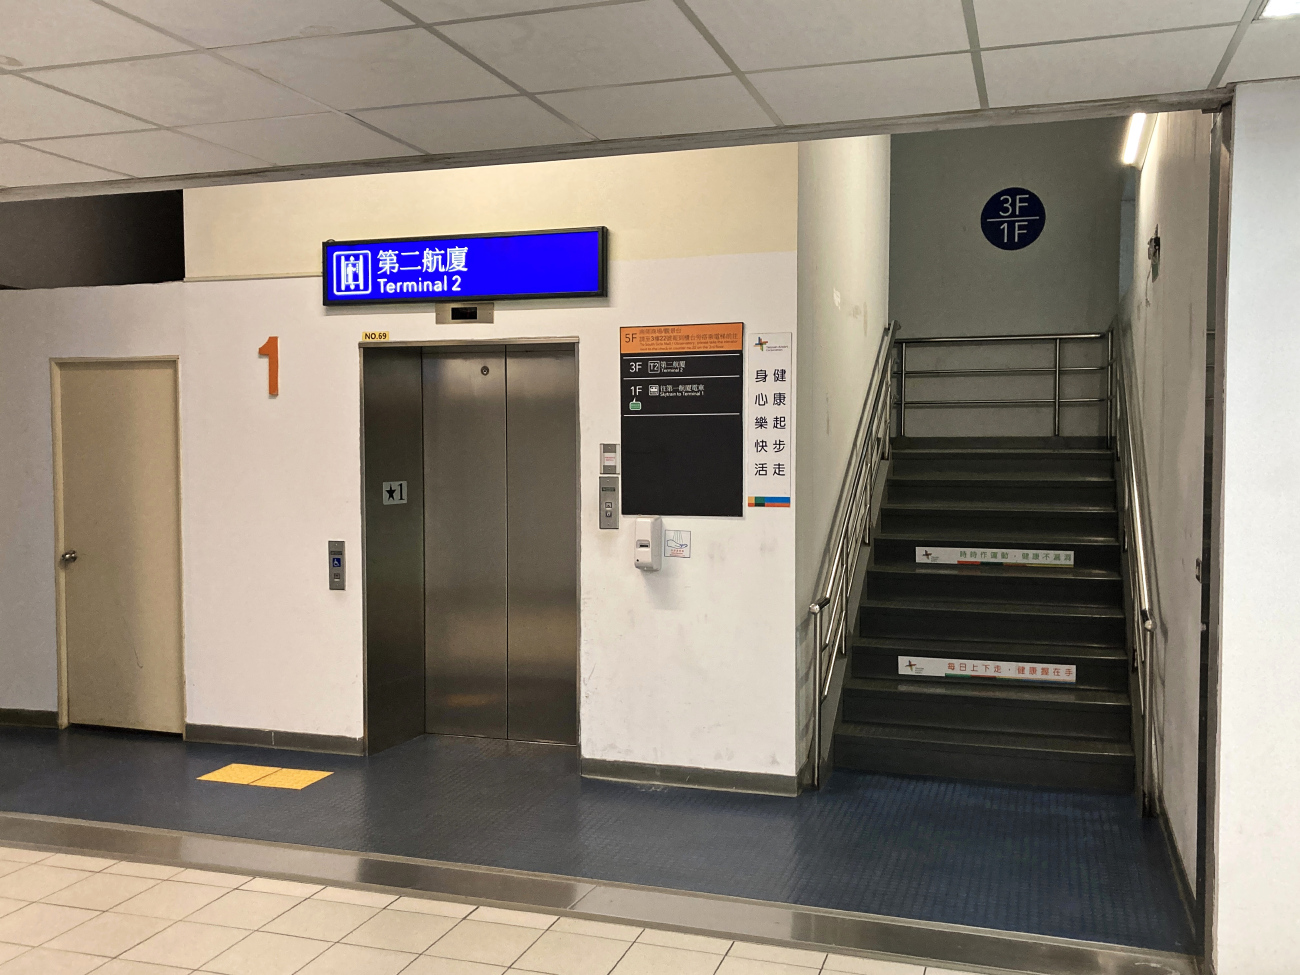 Тайбэй — Скайтрейн Аэропорт Тайбей 桃園國際機場旅客自動電車輸送系統